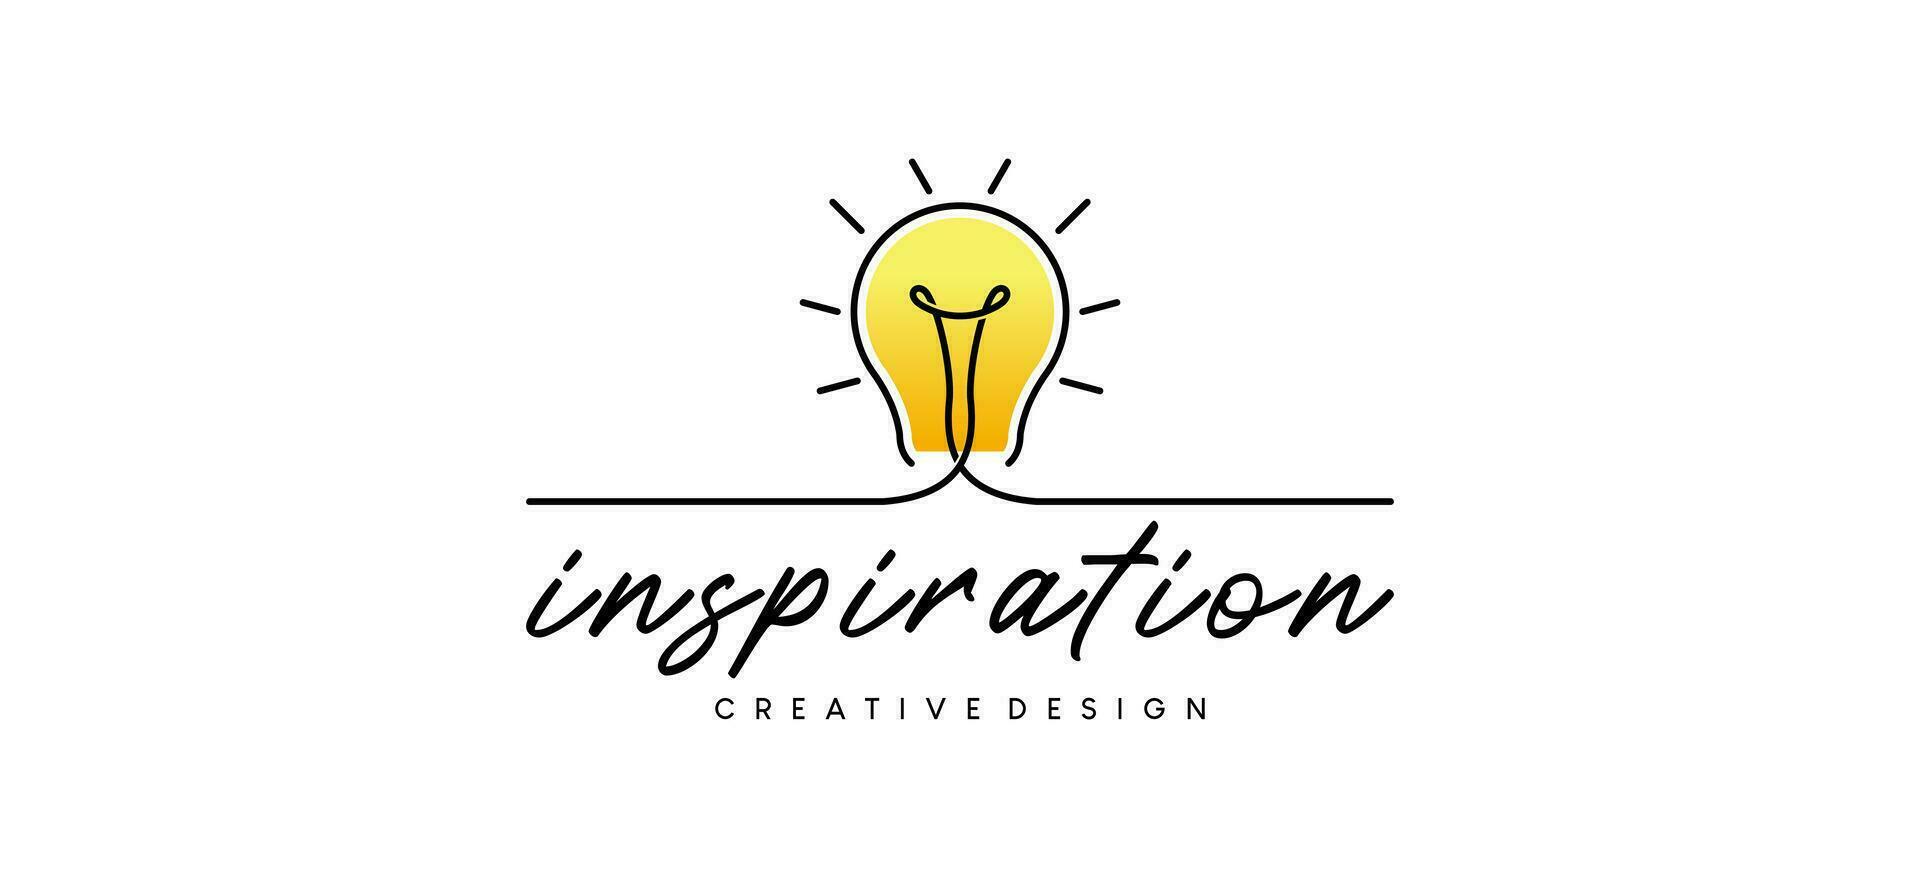 Creative light bulb idea logo template for technology design, inspiration, creativity, innovation vector